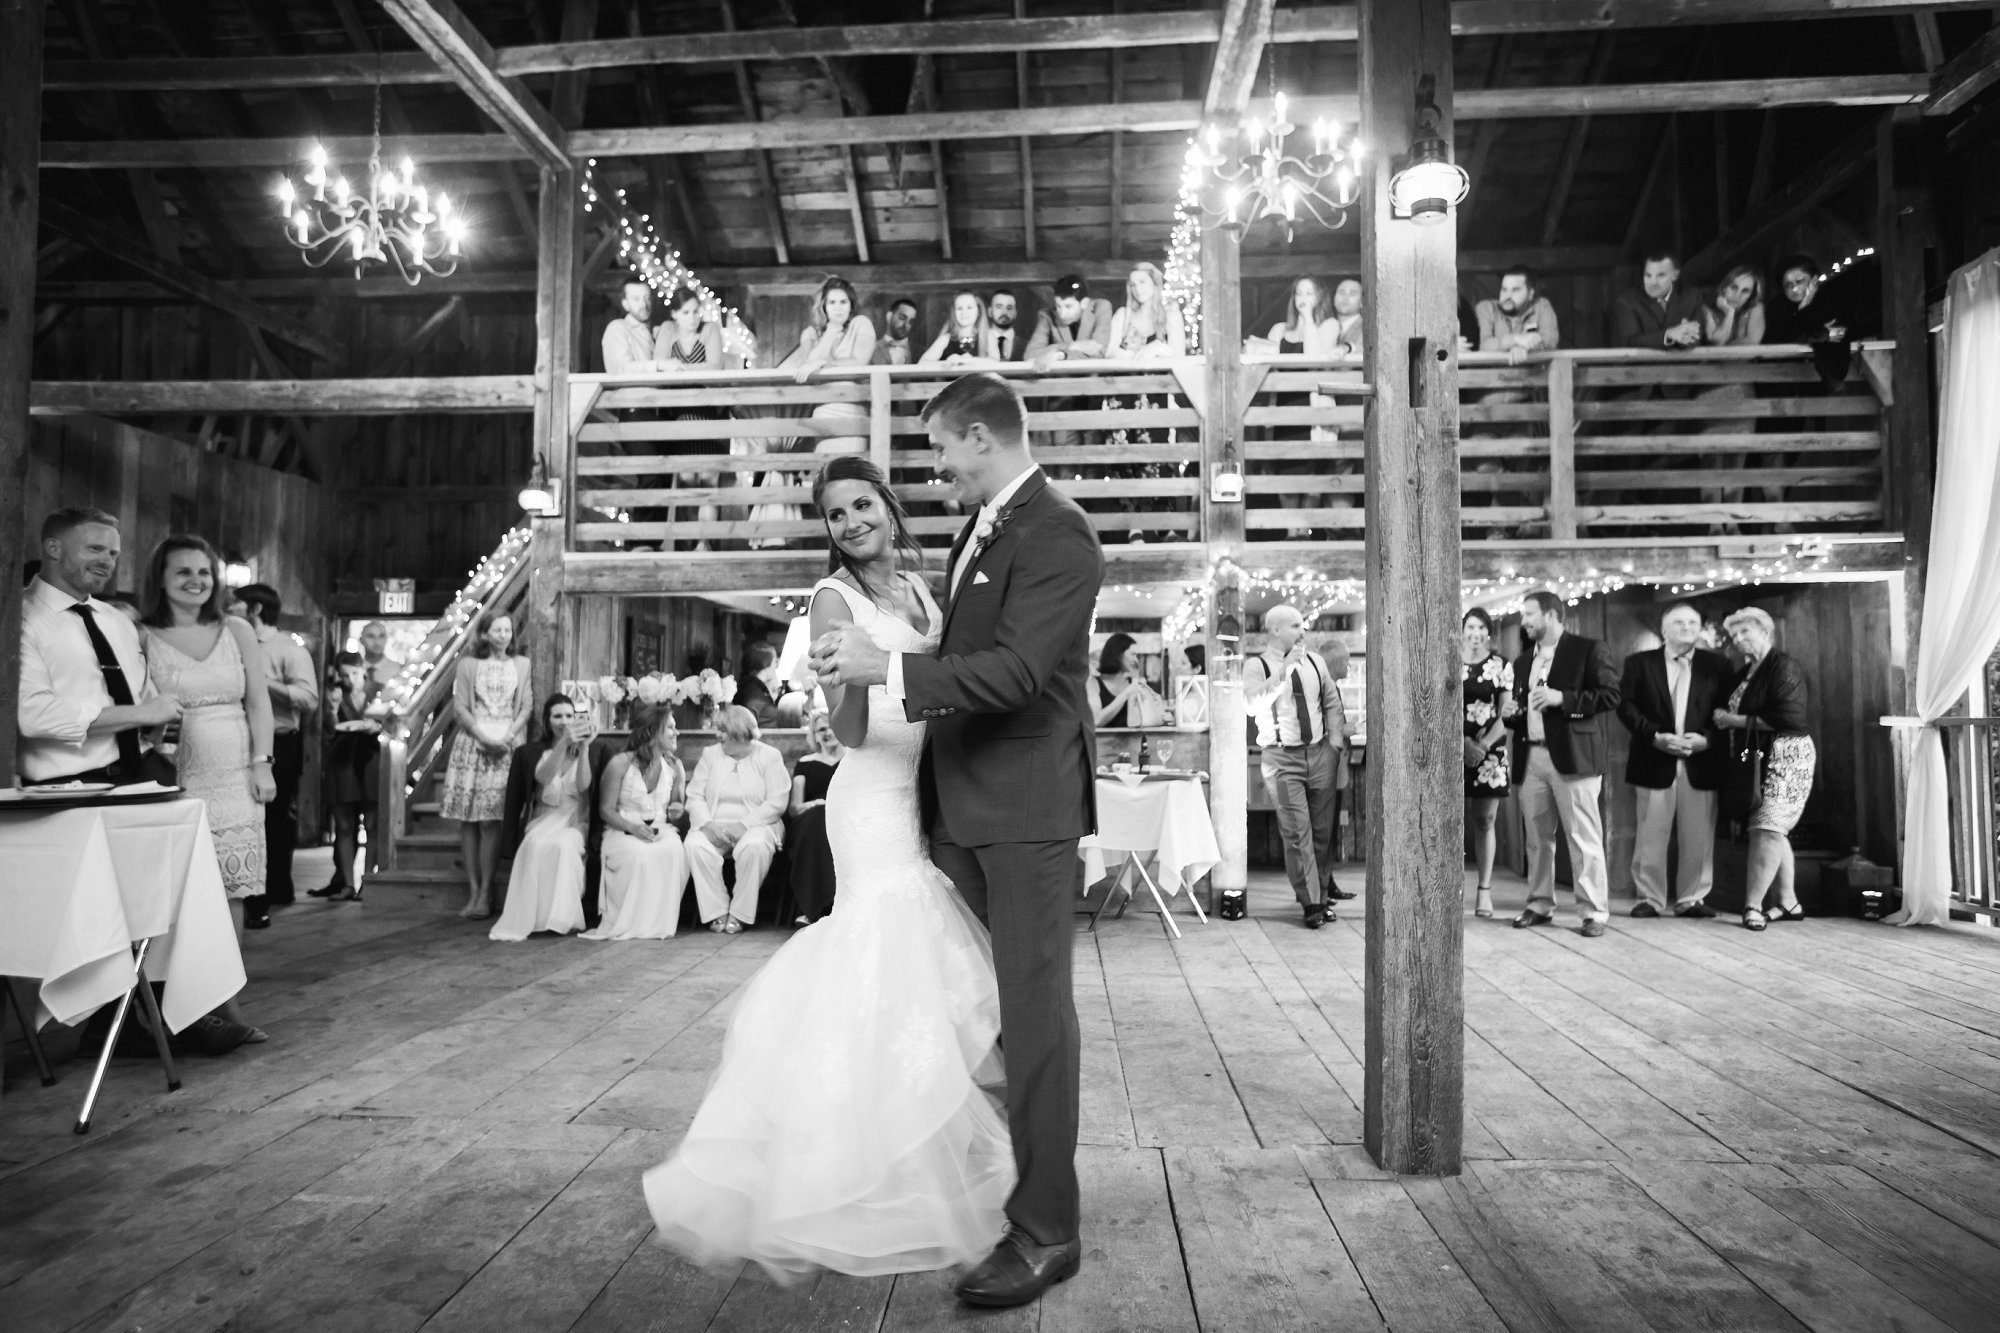 rustic barn wedding reception at josias river farm cape neddick me